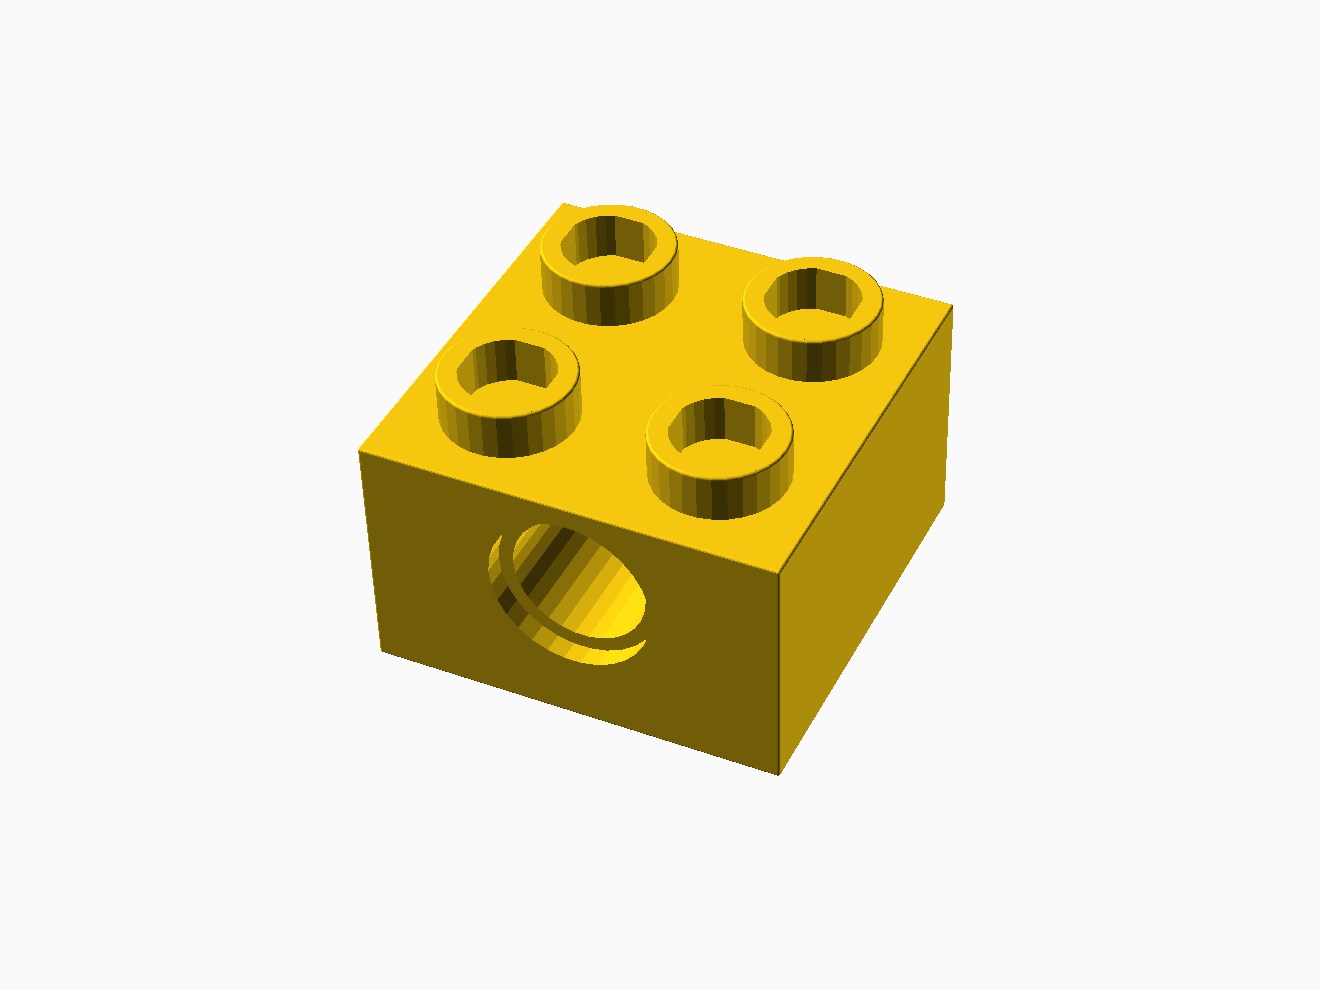 3D printable model of a LEGO Technic 2x2 Brick.